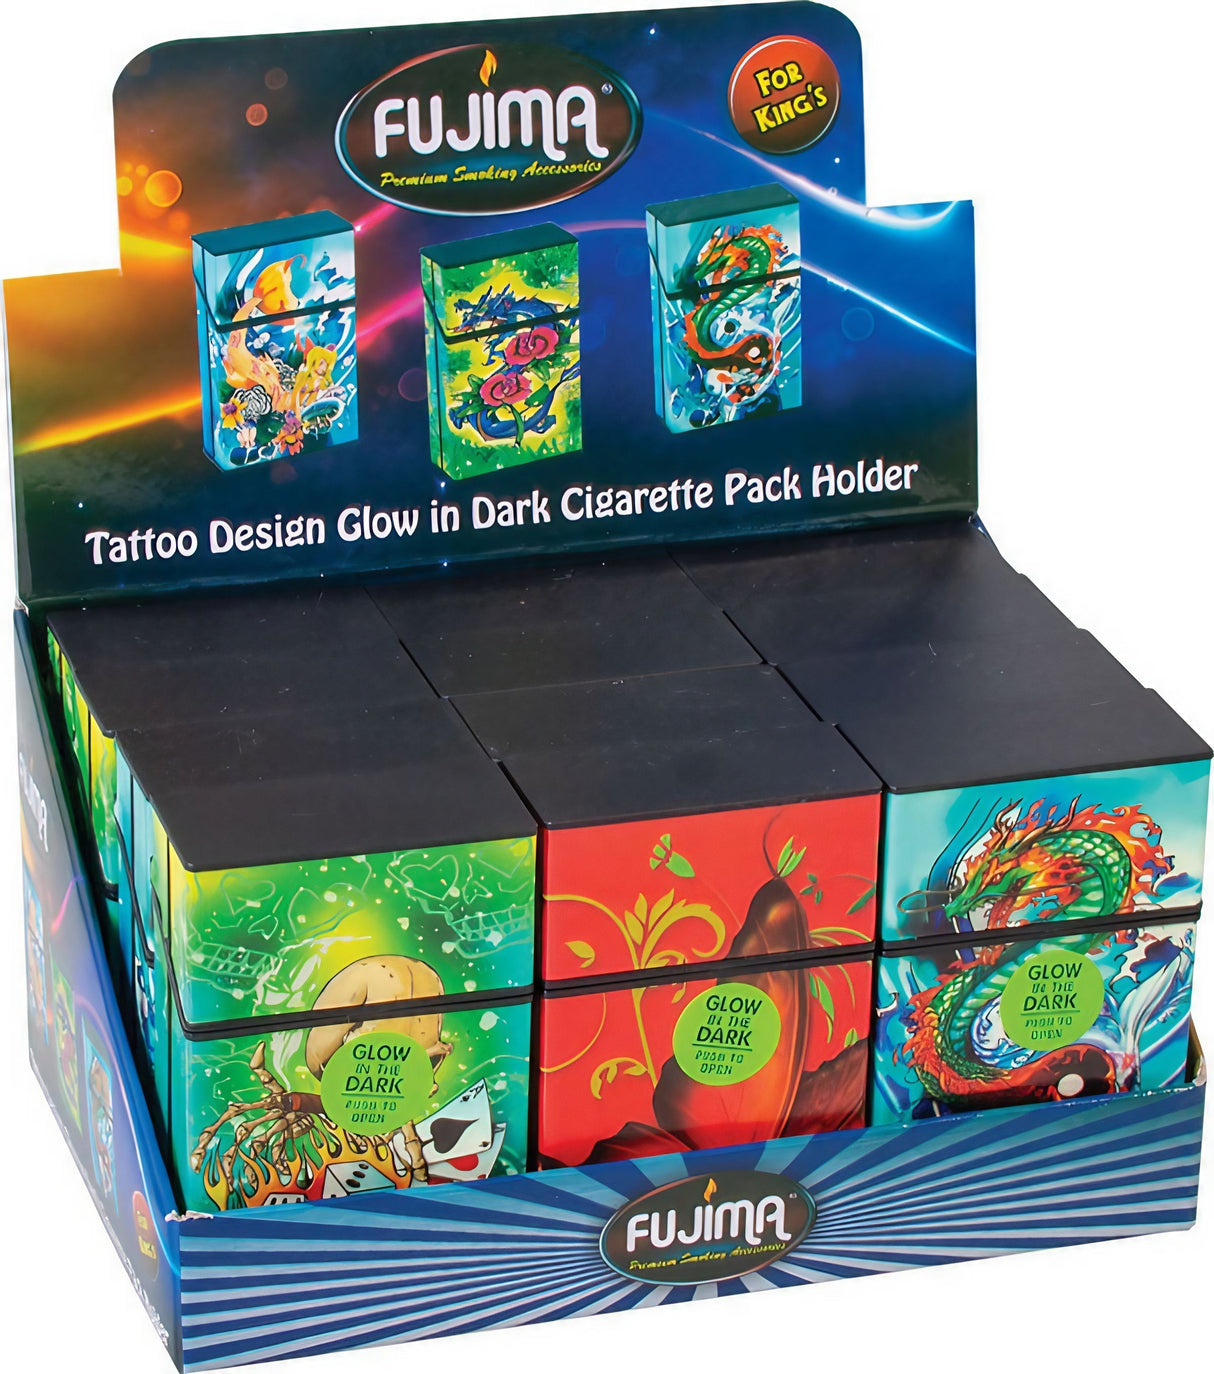 Fujima Glow Tattoo Cigarette Cases, 12-Pack display box with vibrant tattoo designs